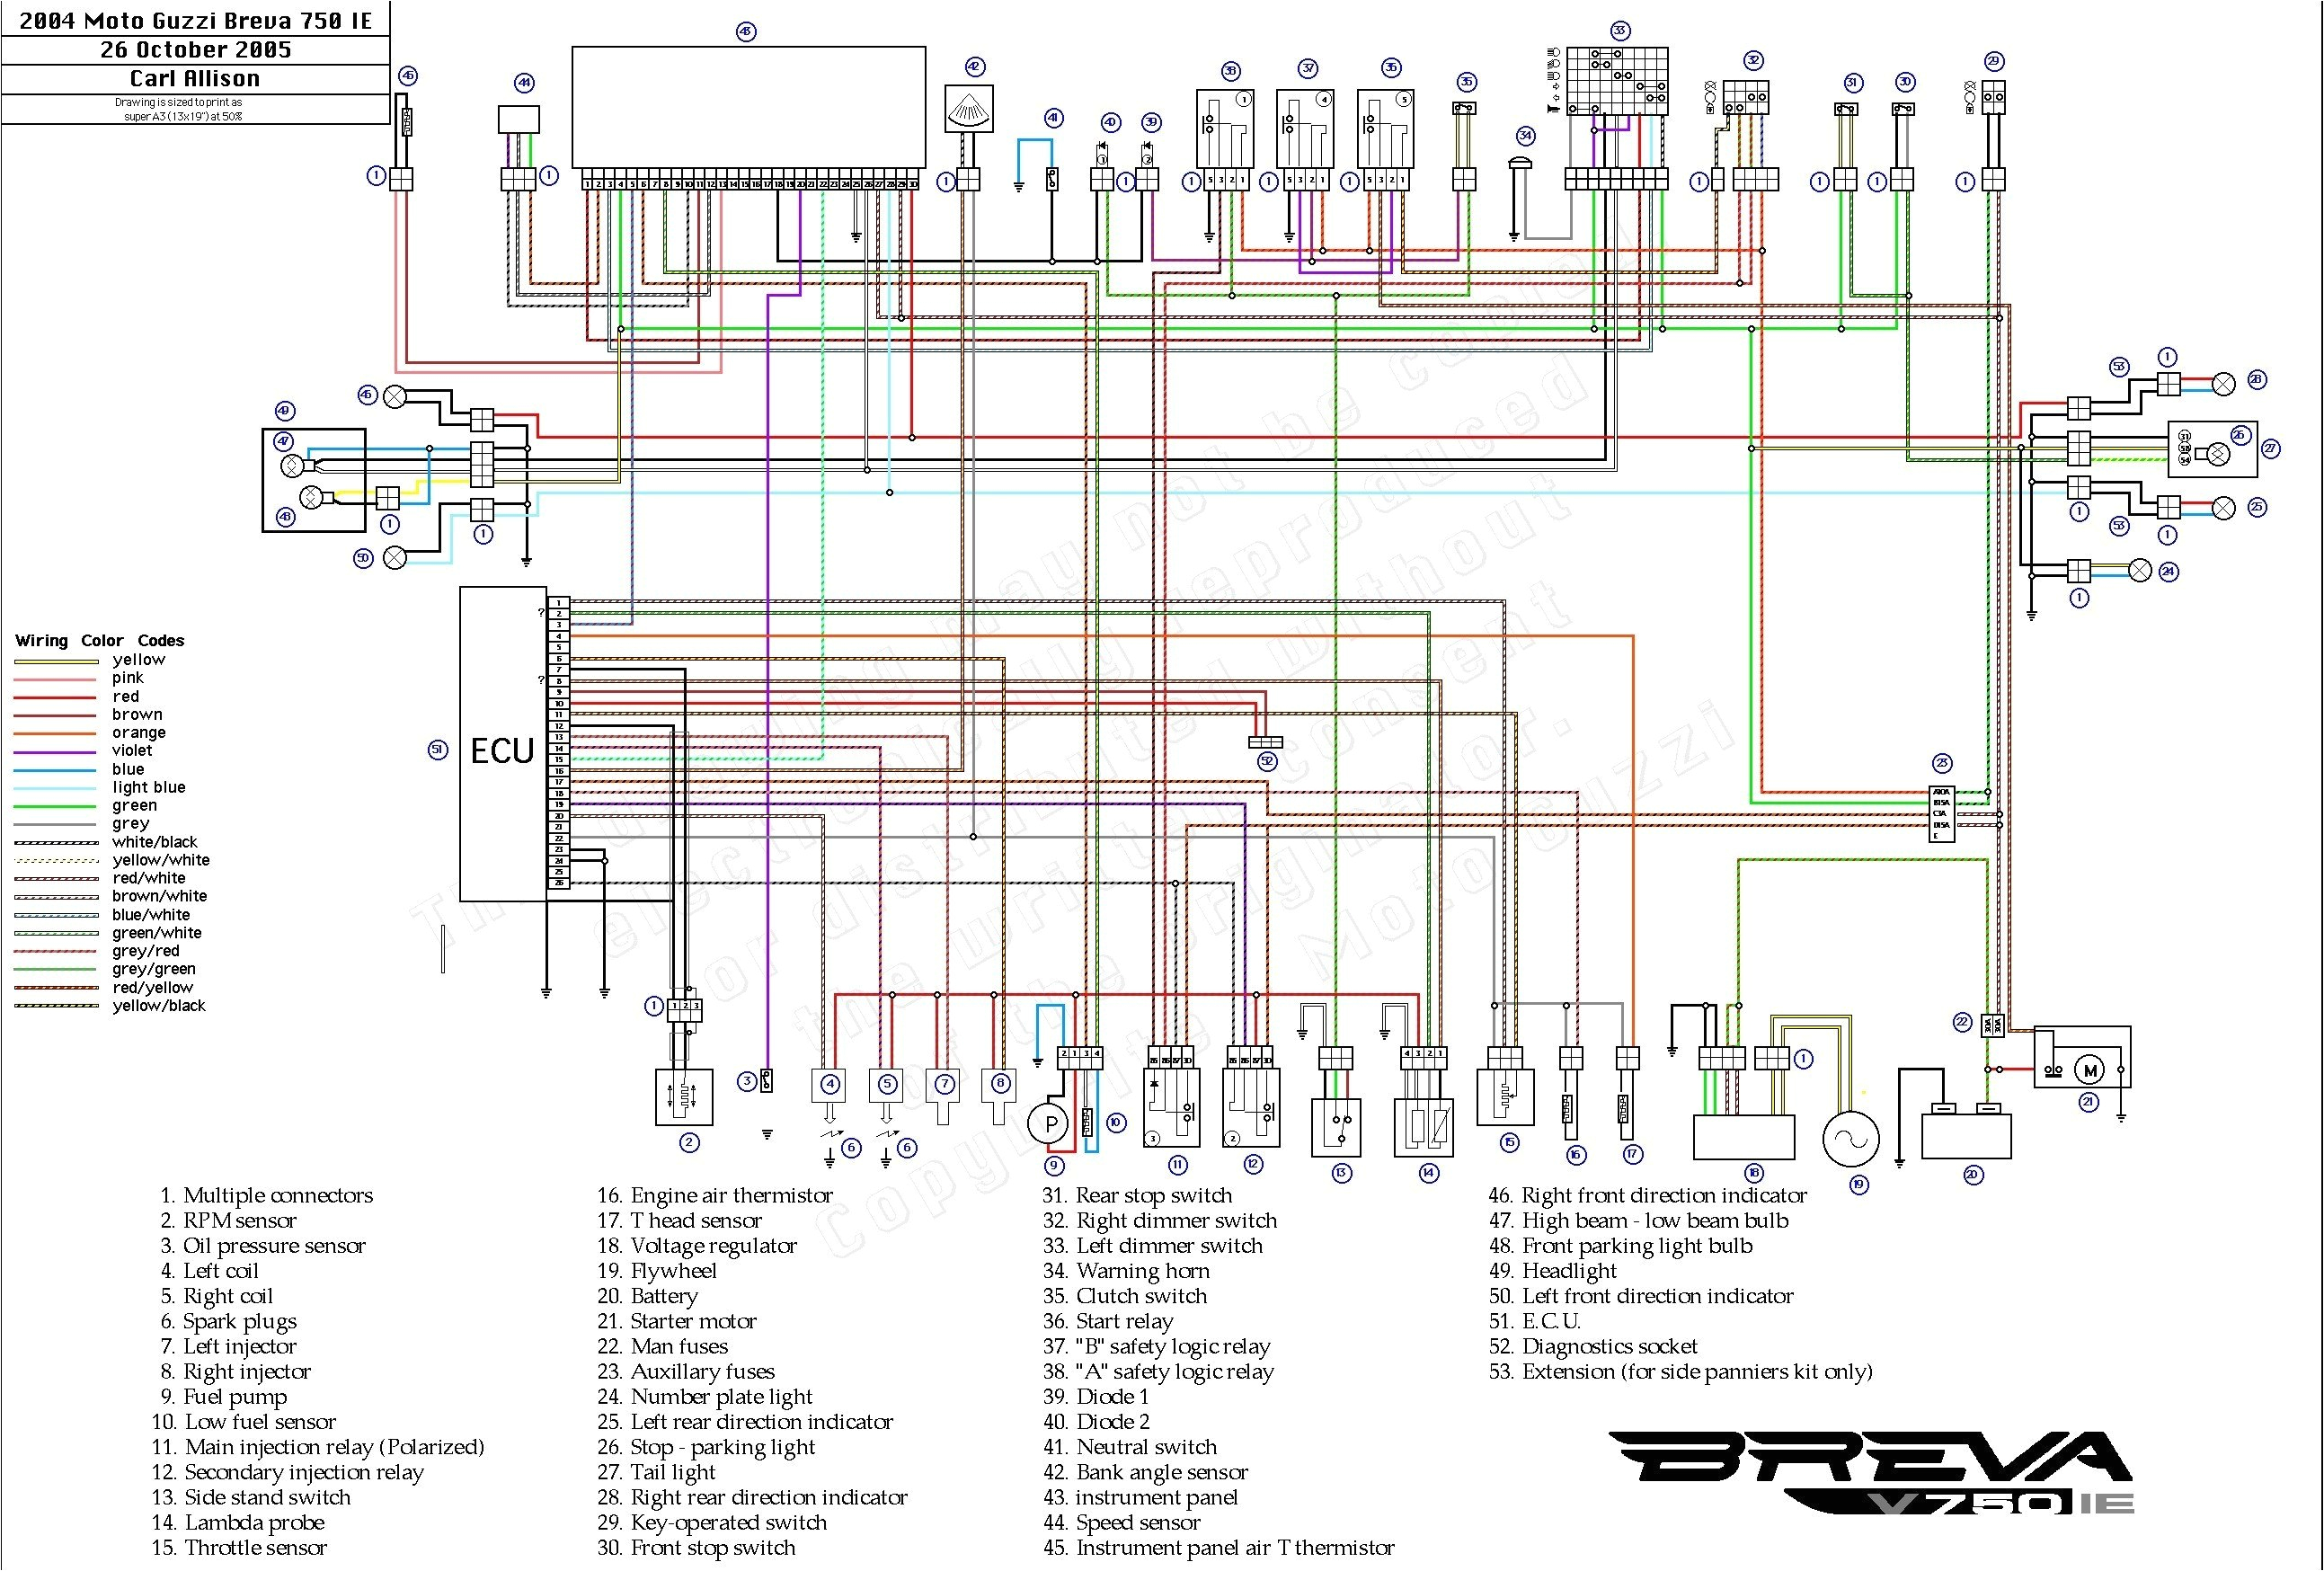 dodge electrical schematics wiring diagram dodge ram conversion van wiring diagram get free image about wiring